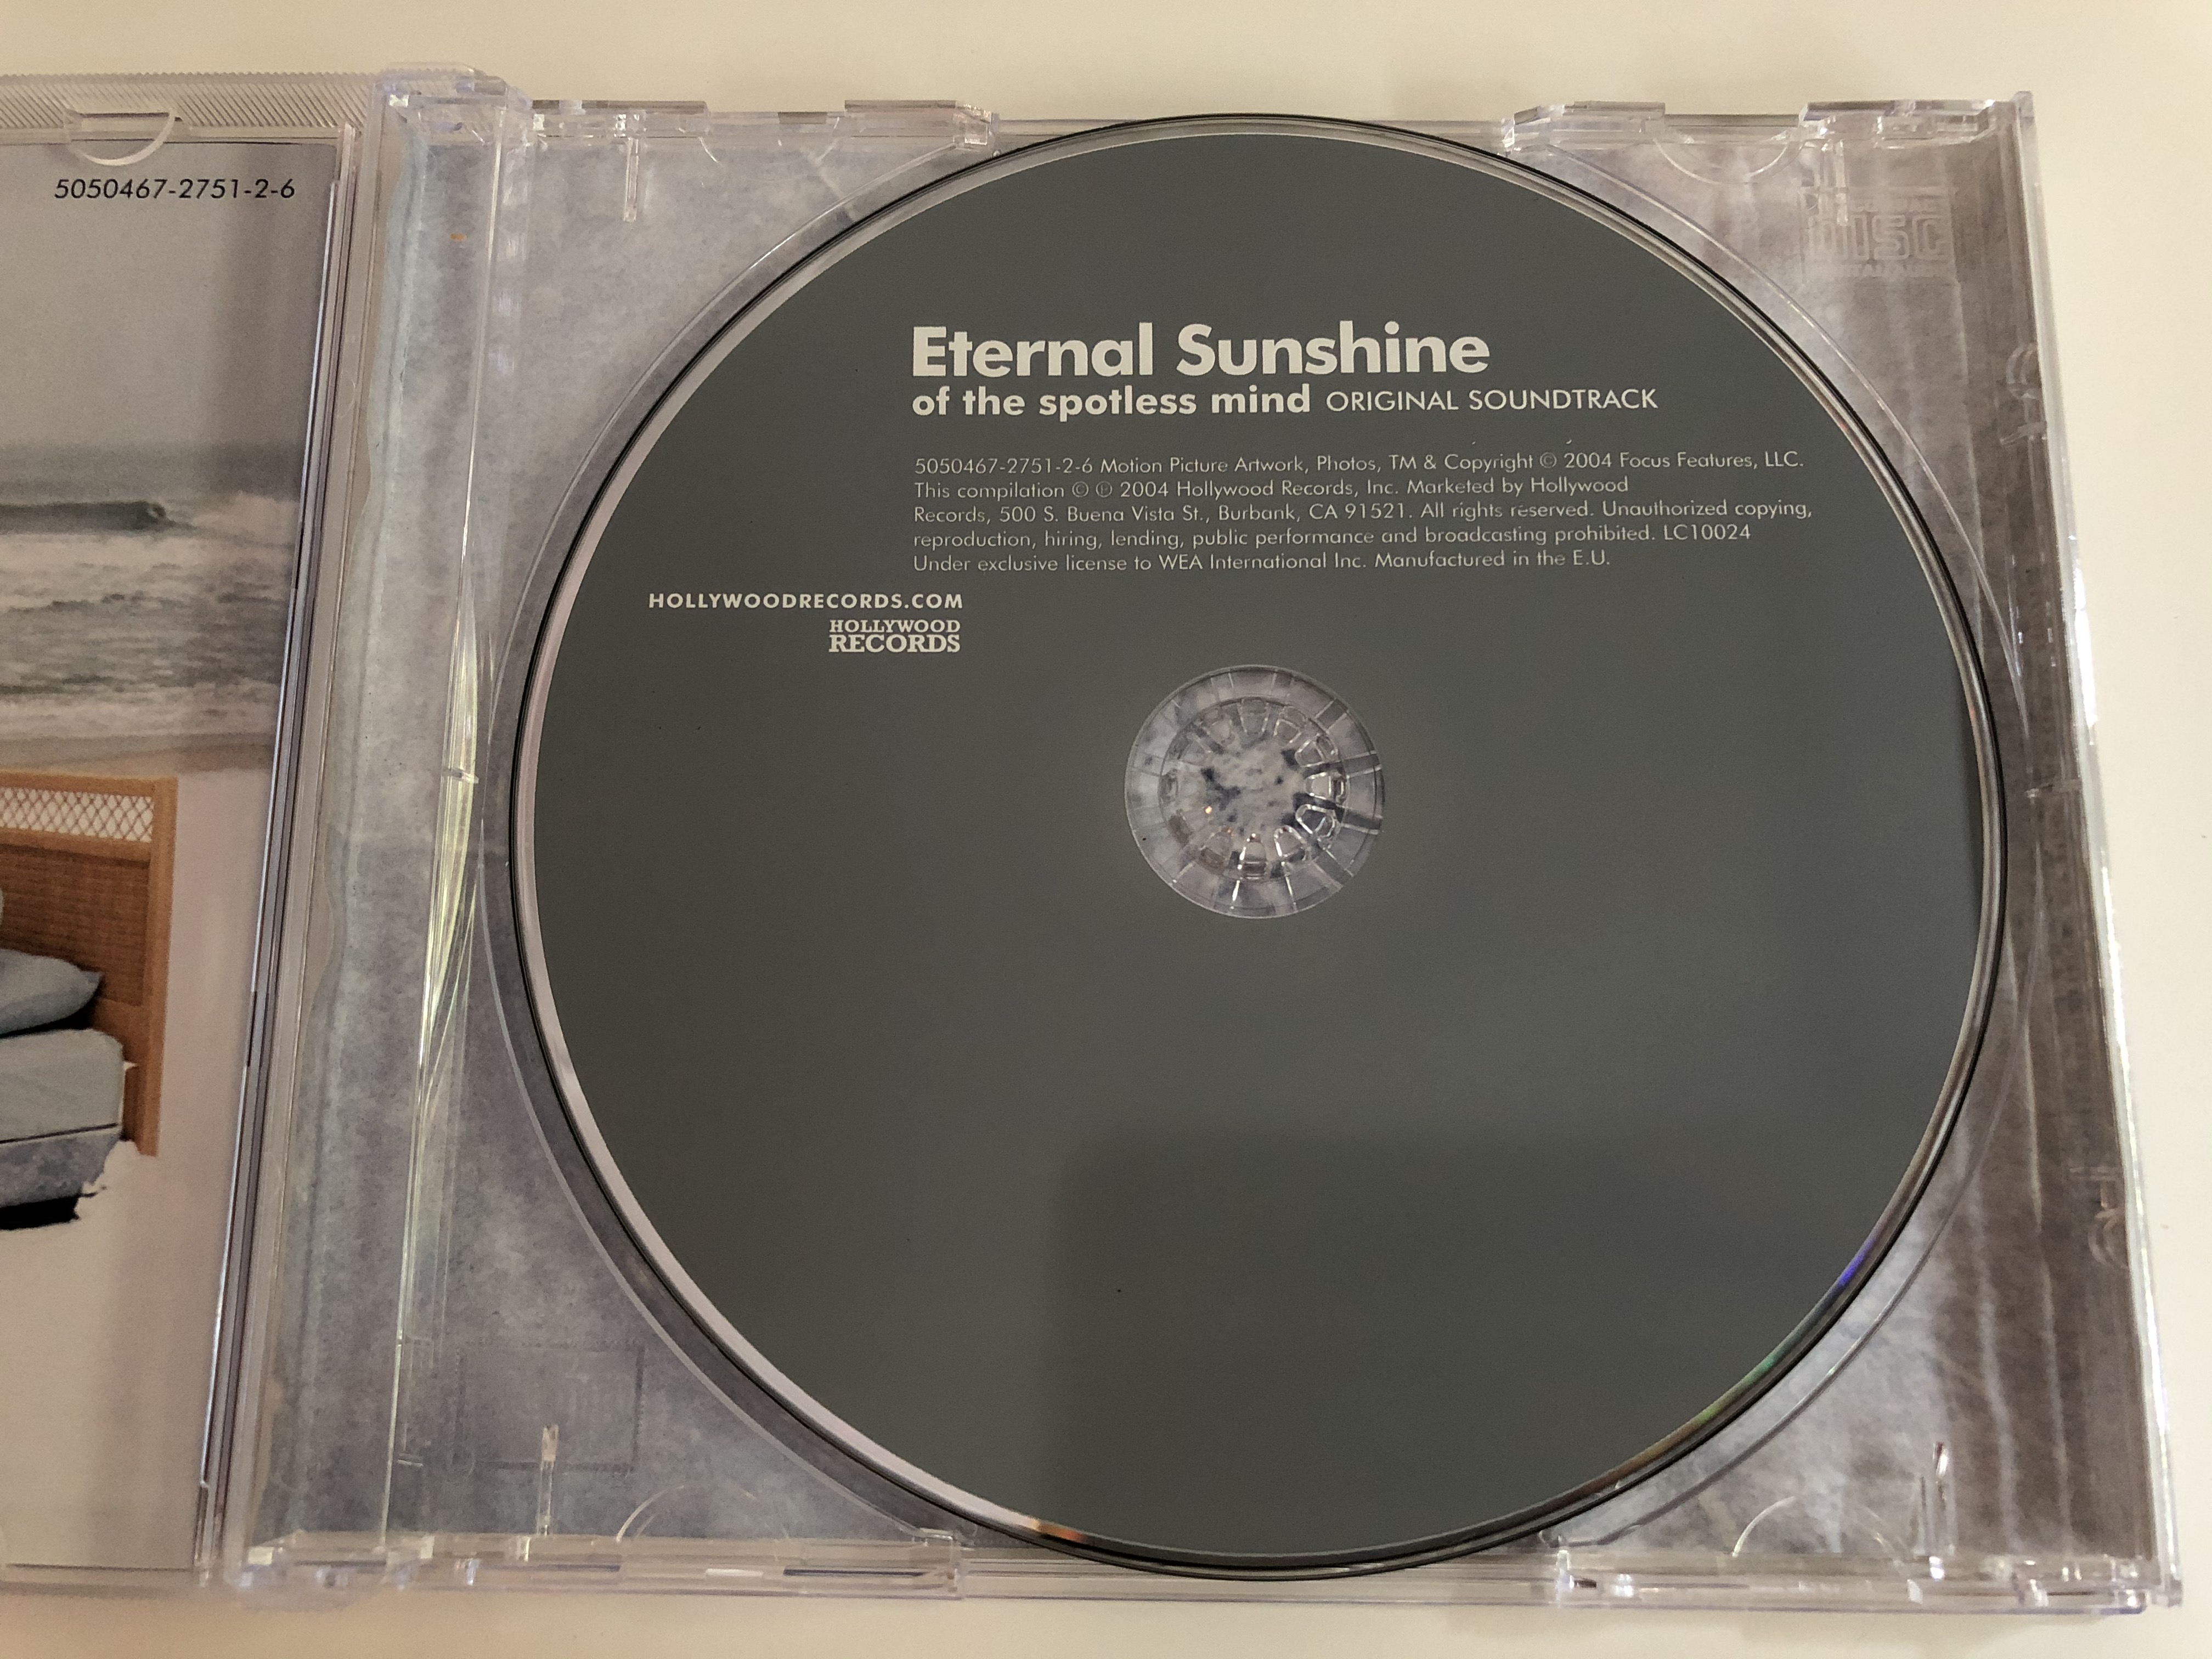 eternal-sunshine-of-the-spotless-mind-original-soundtrack-hollywood-records-audio-cd-2004-5050467-2751-2-6-5-.jpg